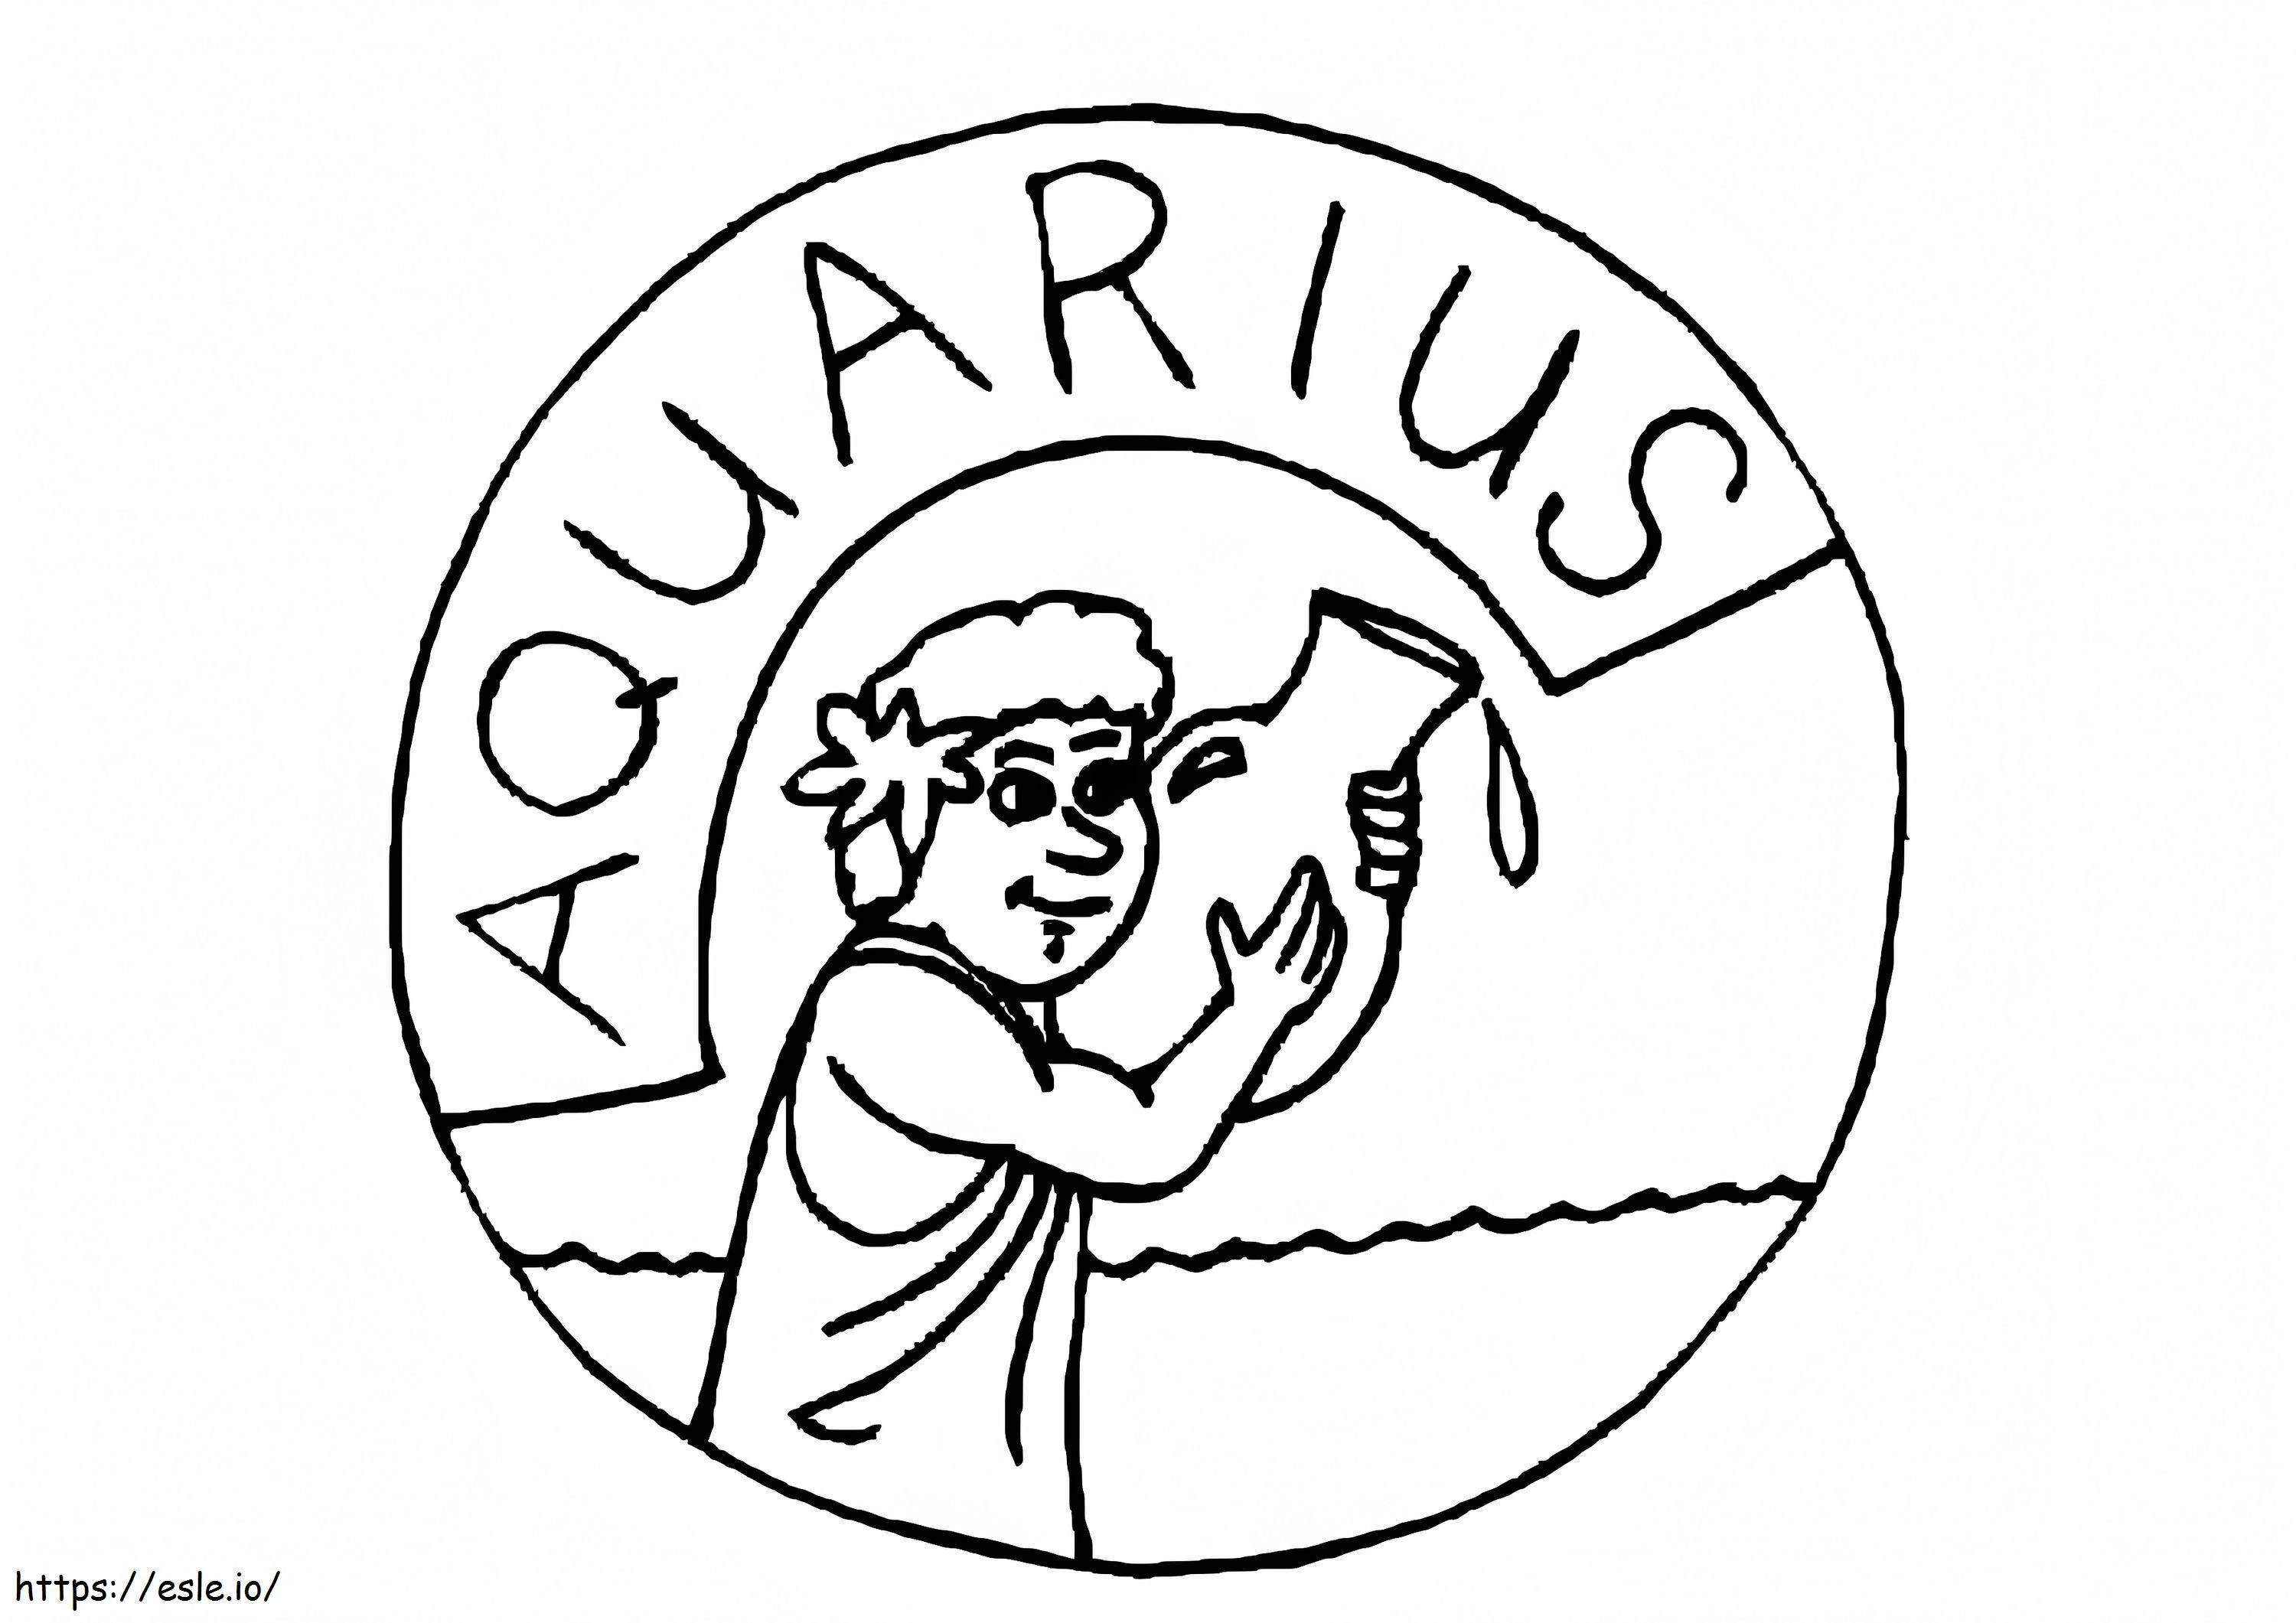 Aquarius 3 coloring page